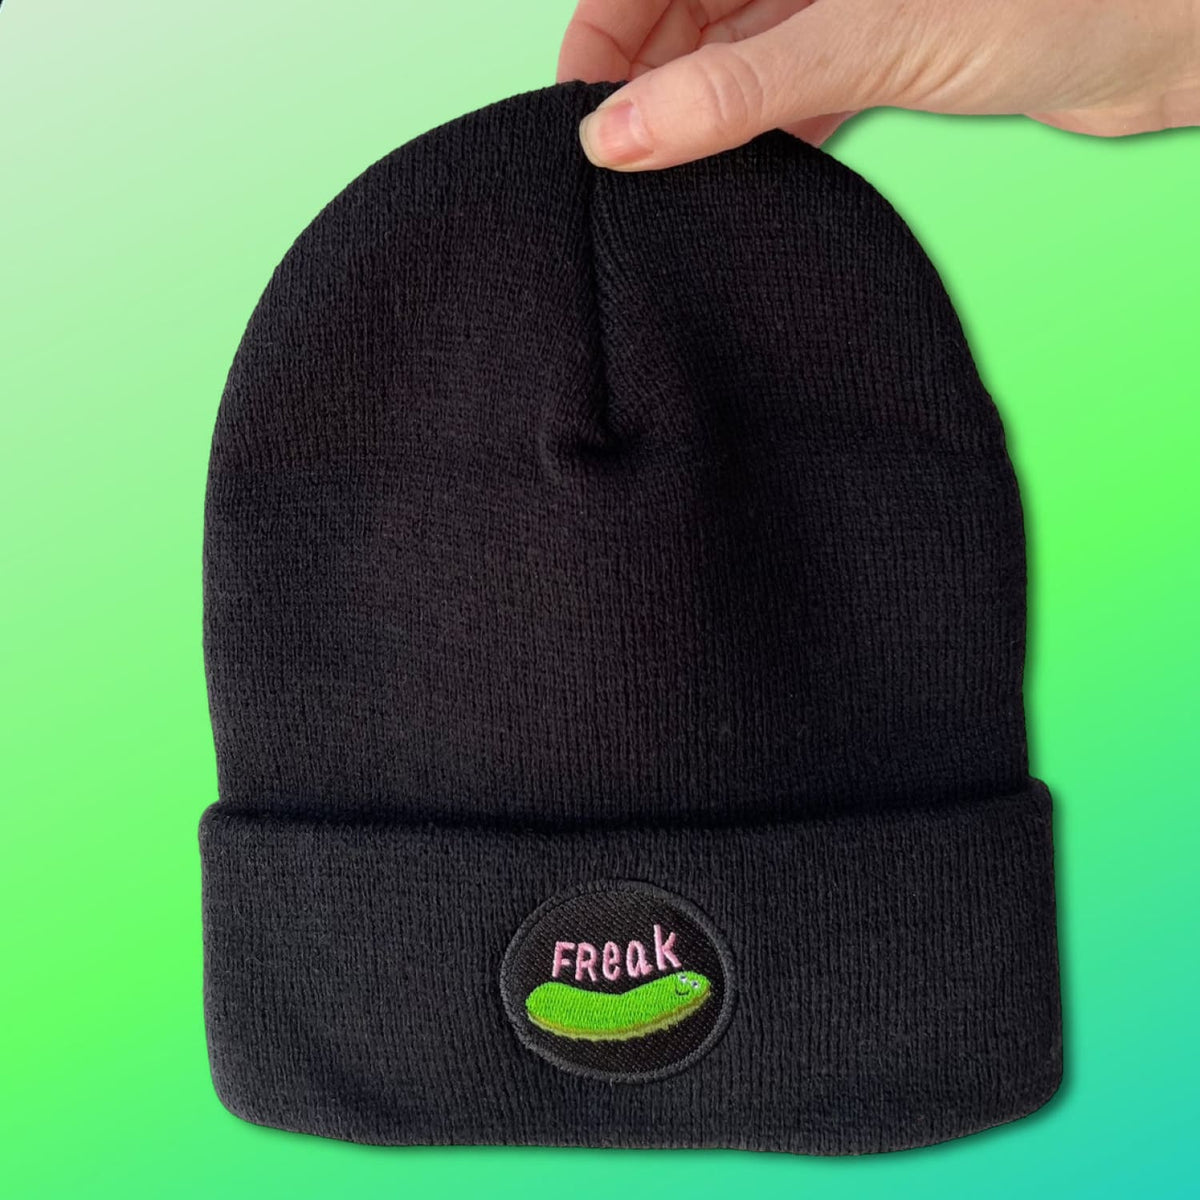 Freak Pickle Beanie - Black Artist Made - Beanie - Hat -